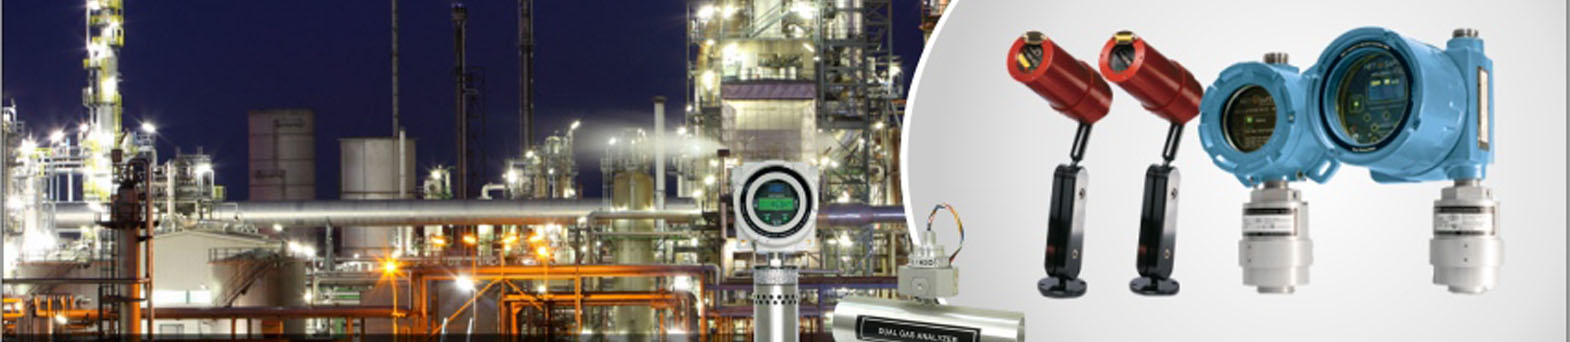 Toxic & Flammable Gas systems Refrigerant & VOC Gas Sensors Full Maintenance Programs.